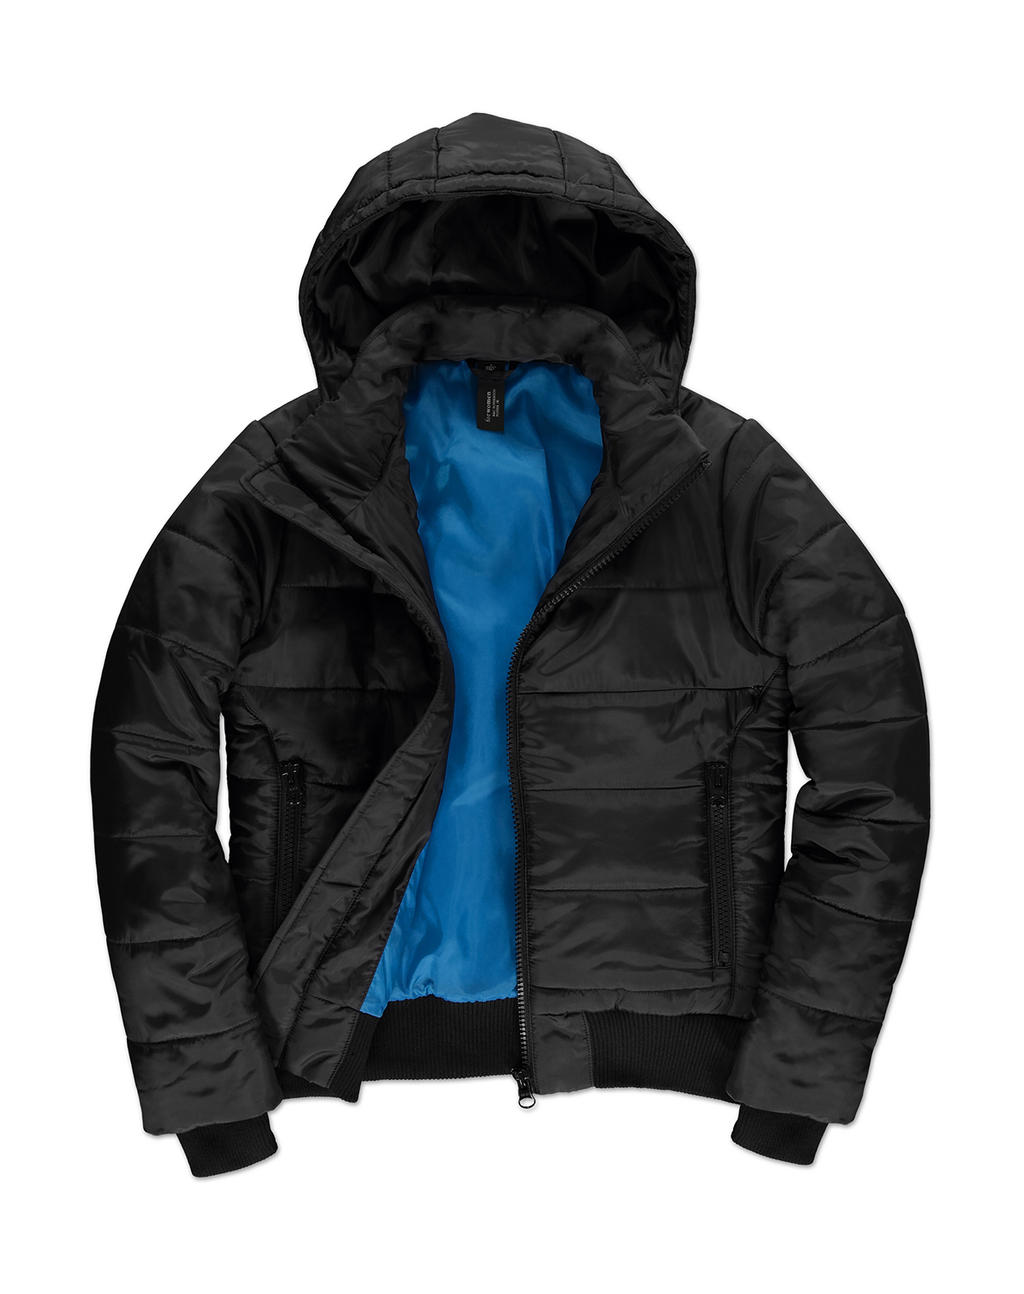  Superhood/women Jacket in Farbe Black/Cobalt Blue